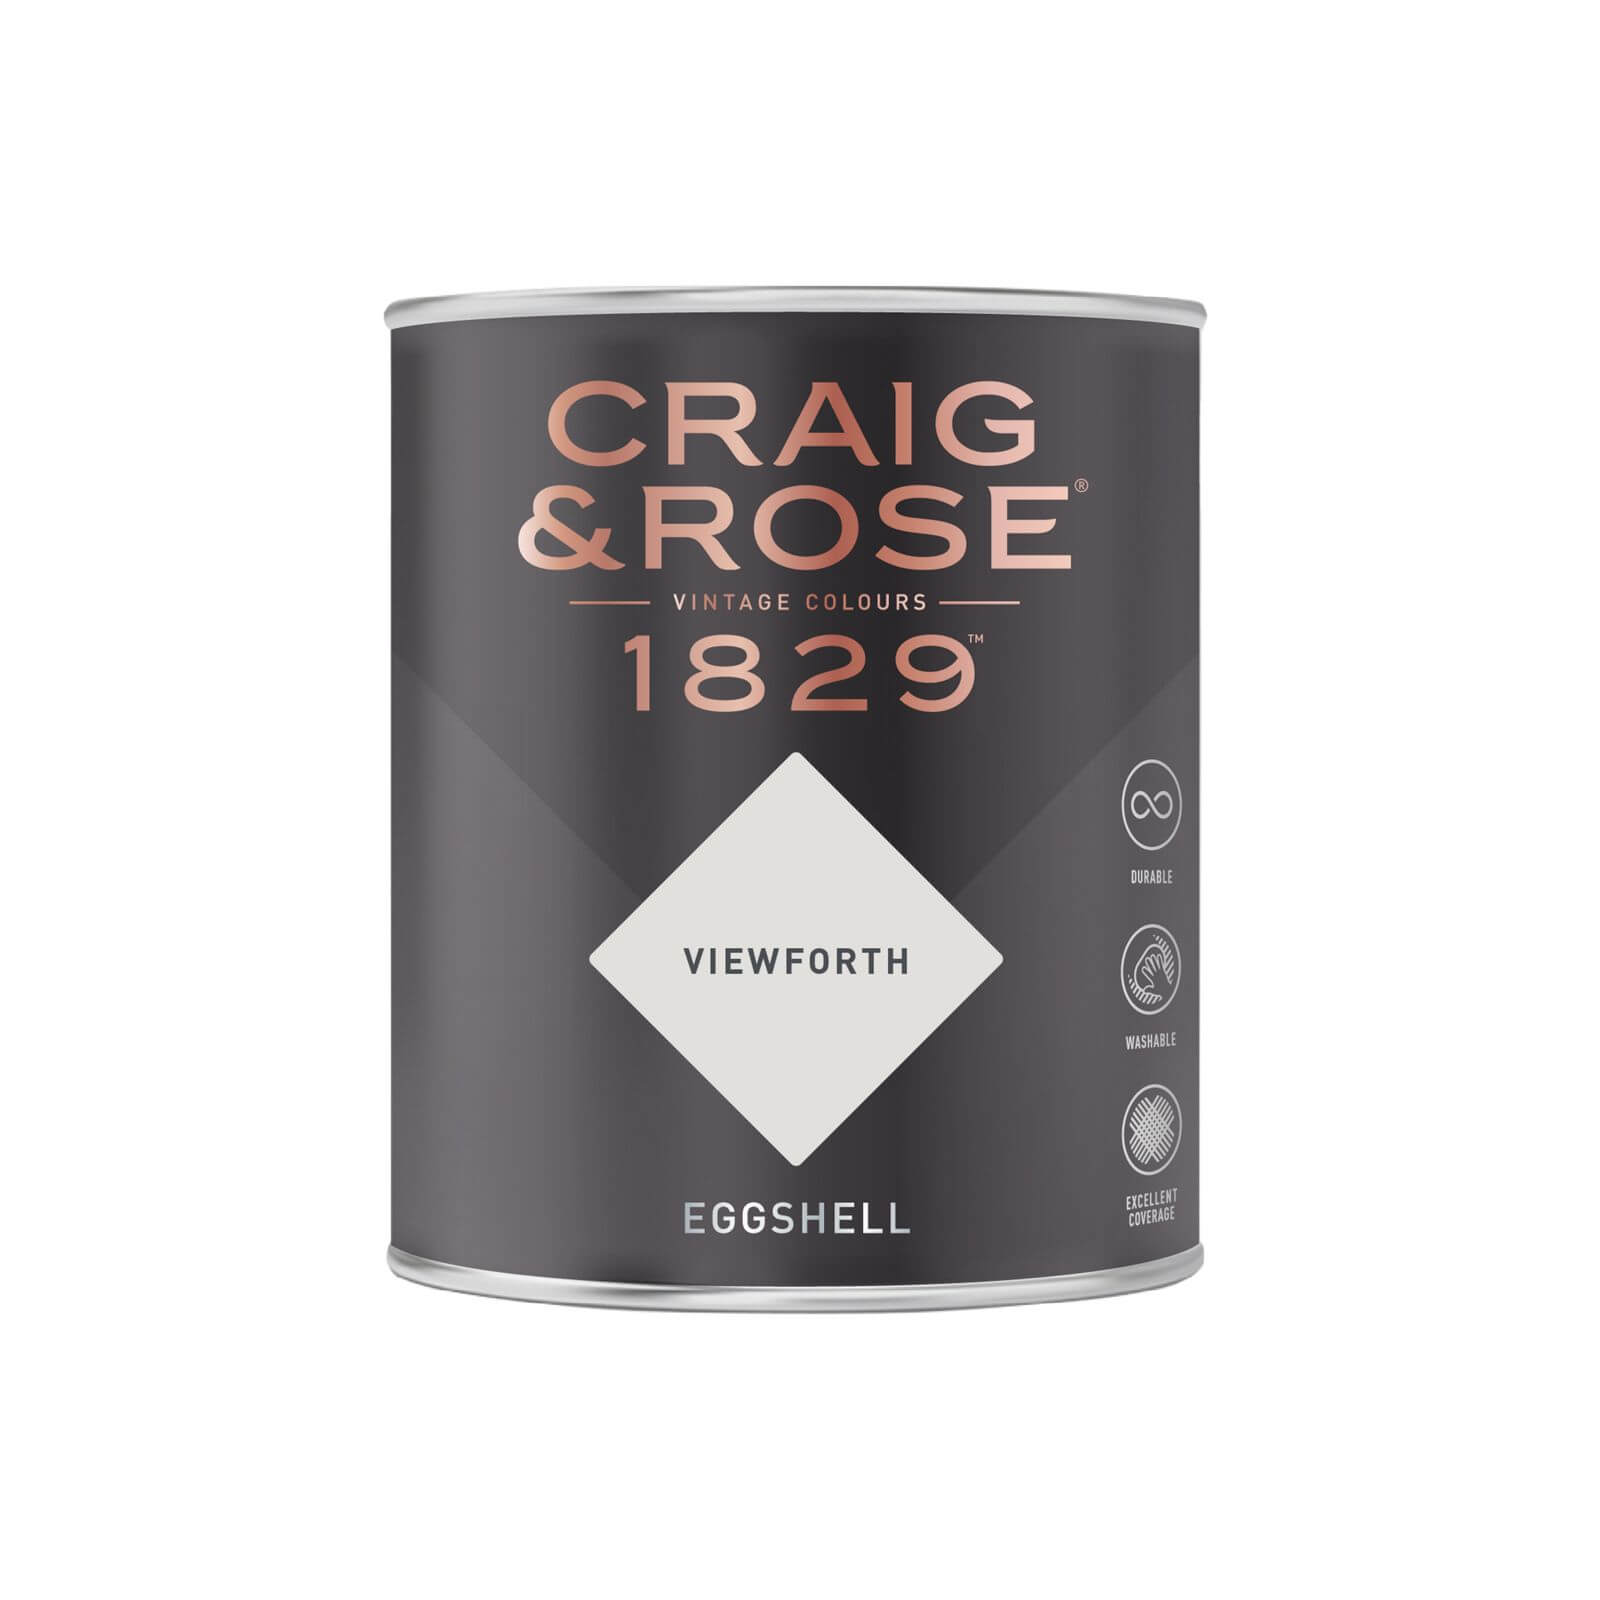 Craig & Rose 1829 Eggshell Paint Viewforth - 750ml